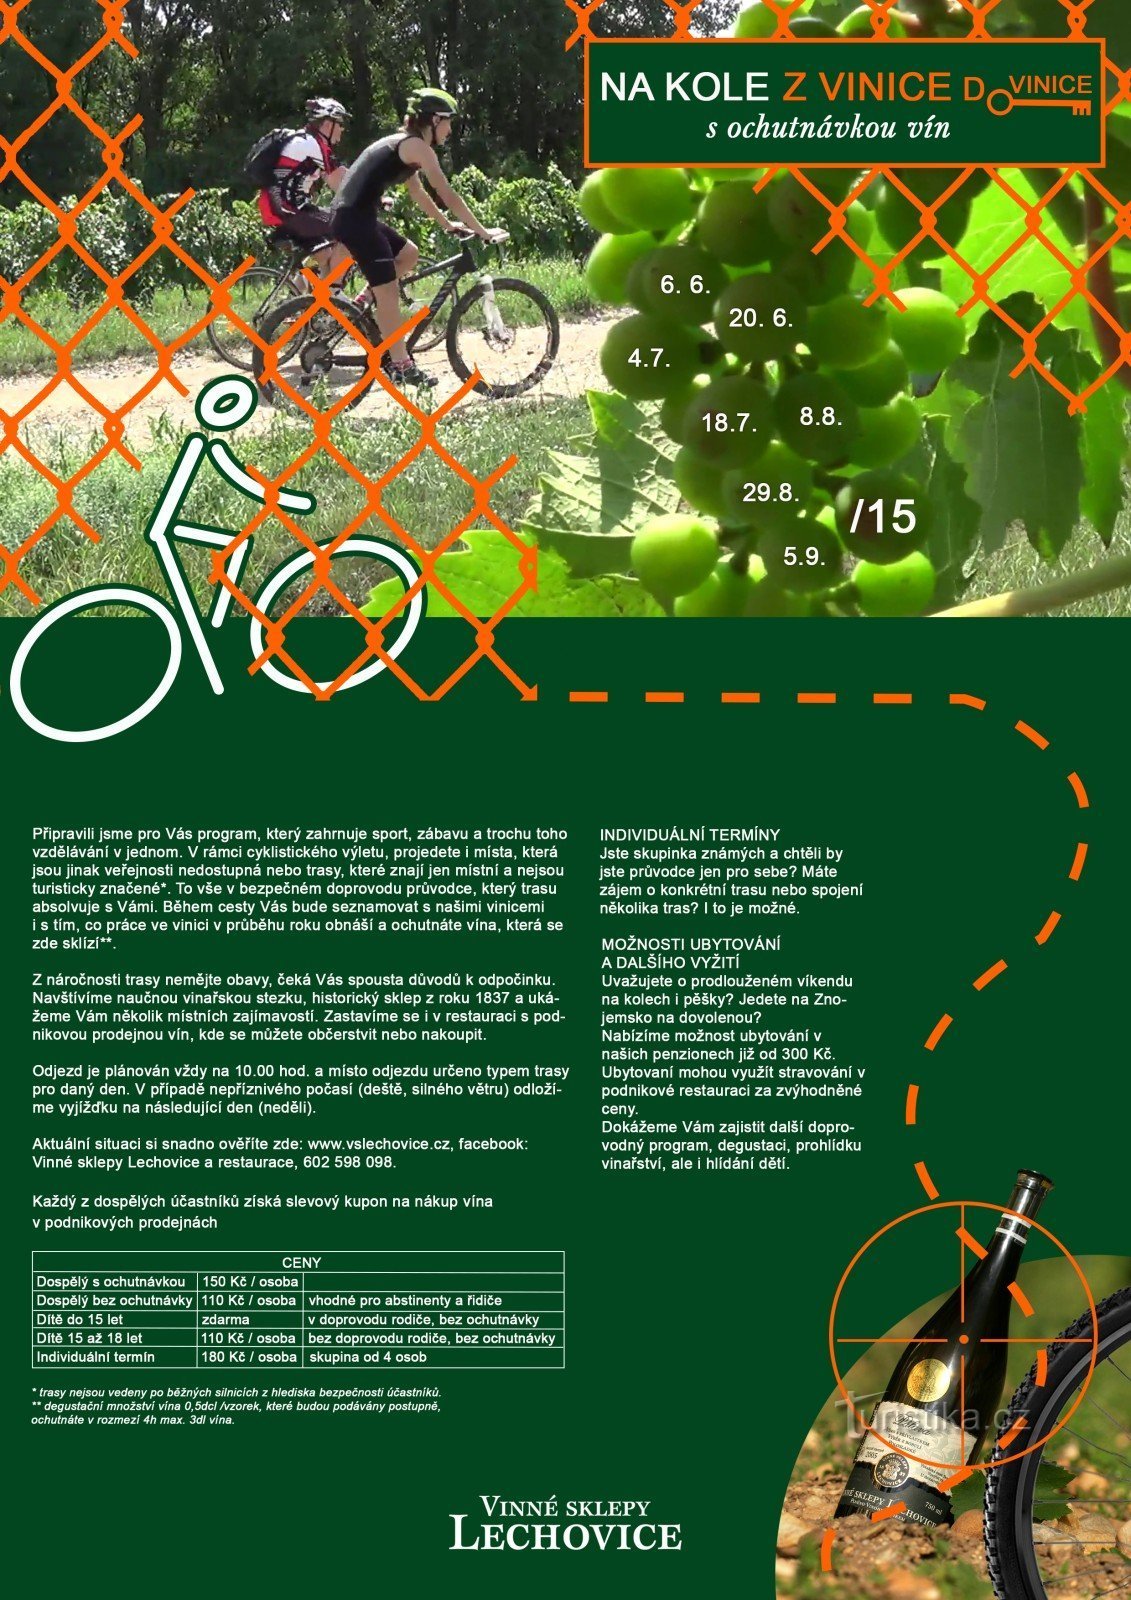 Invitație la o excursie cu bicicleta